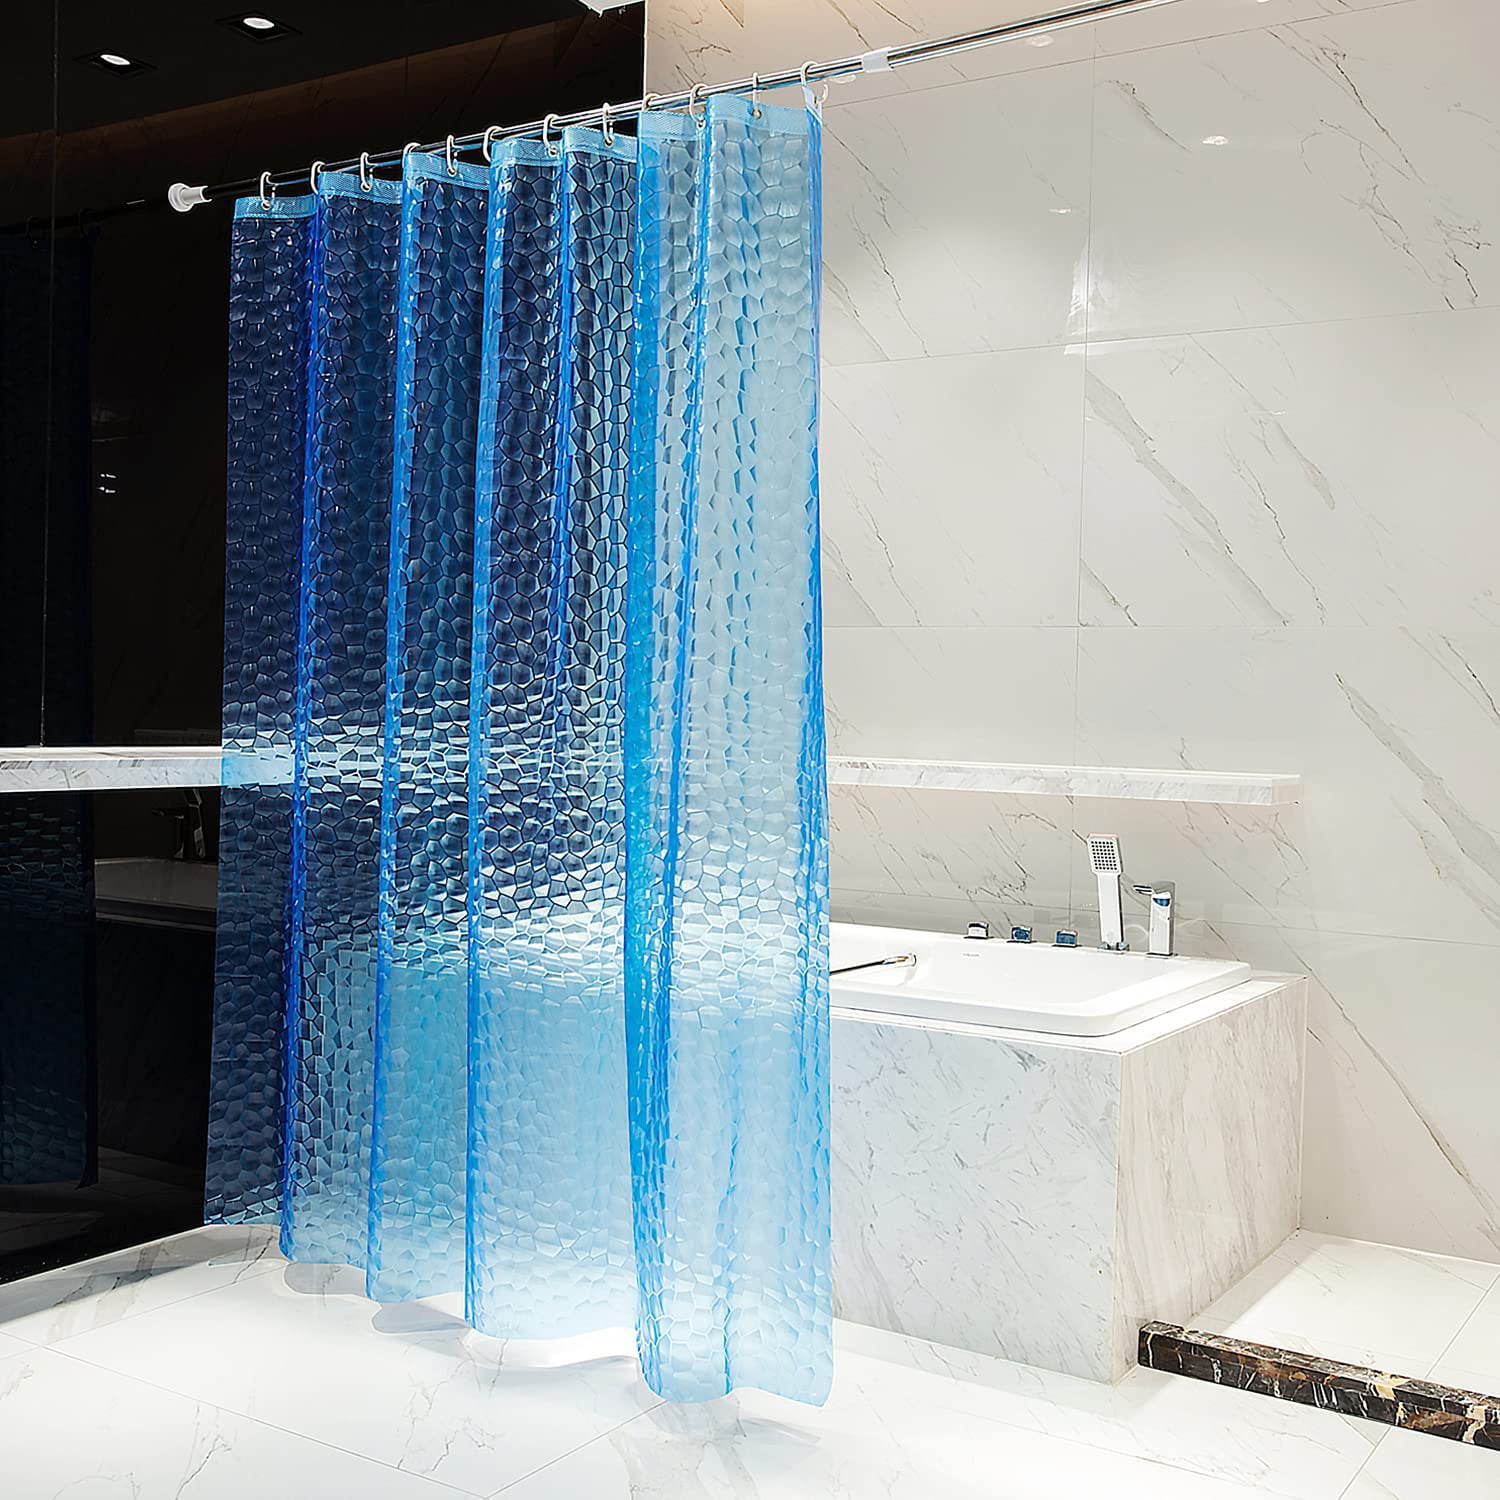 Details about   Bathroom Shower Curtain Hook Bathing Waterproof Fabric Rose Flower Decor 72x72'' 